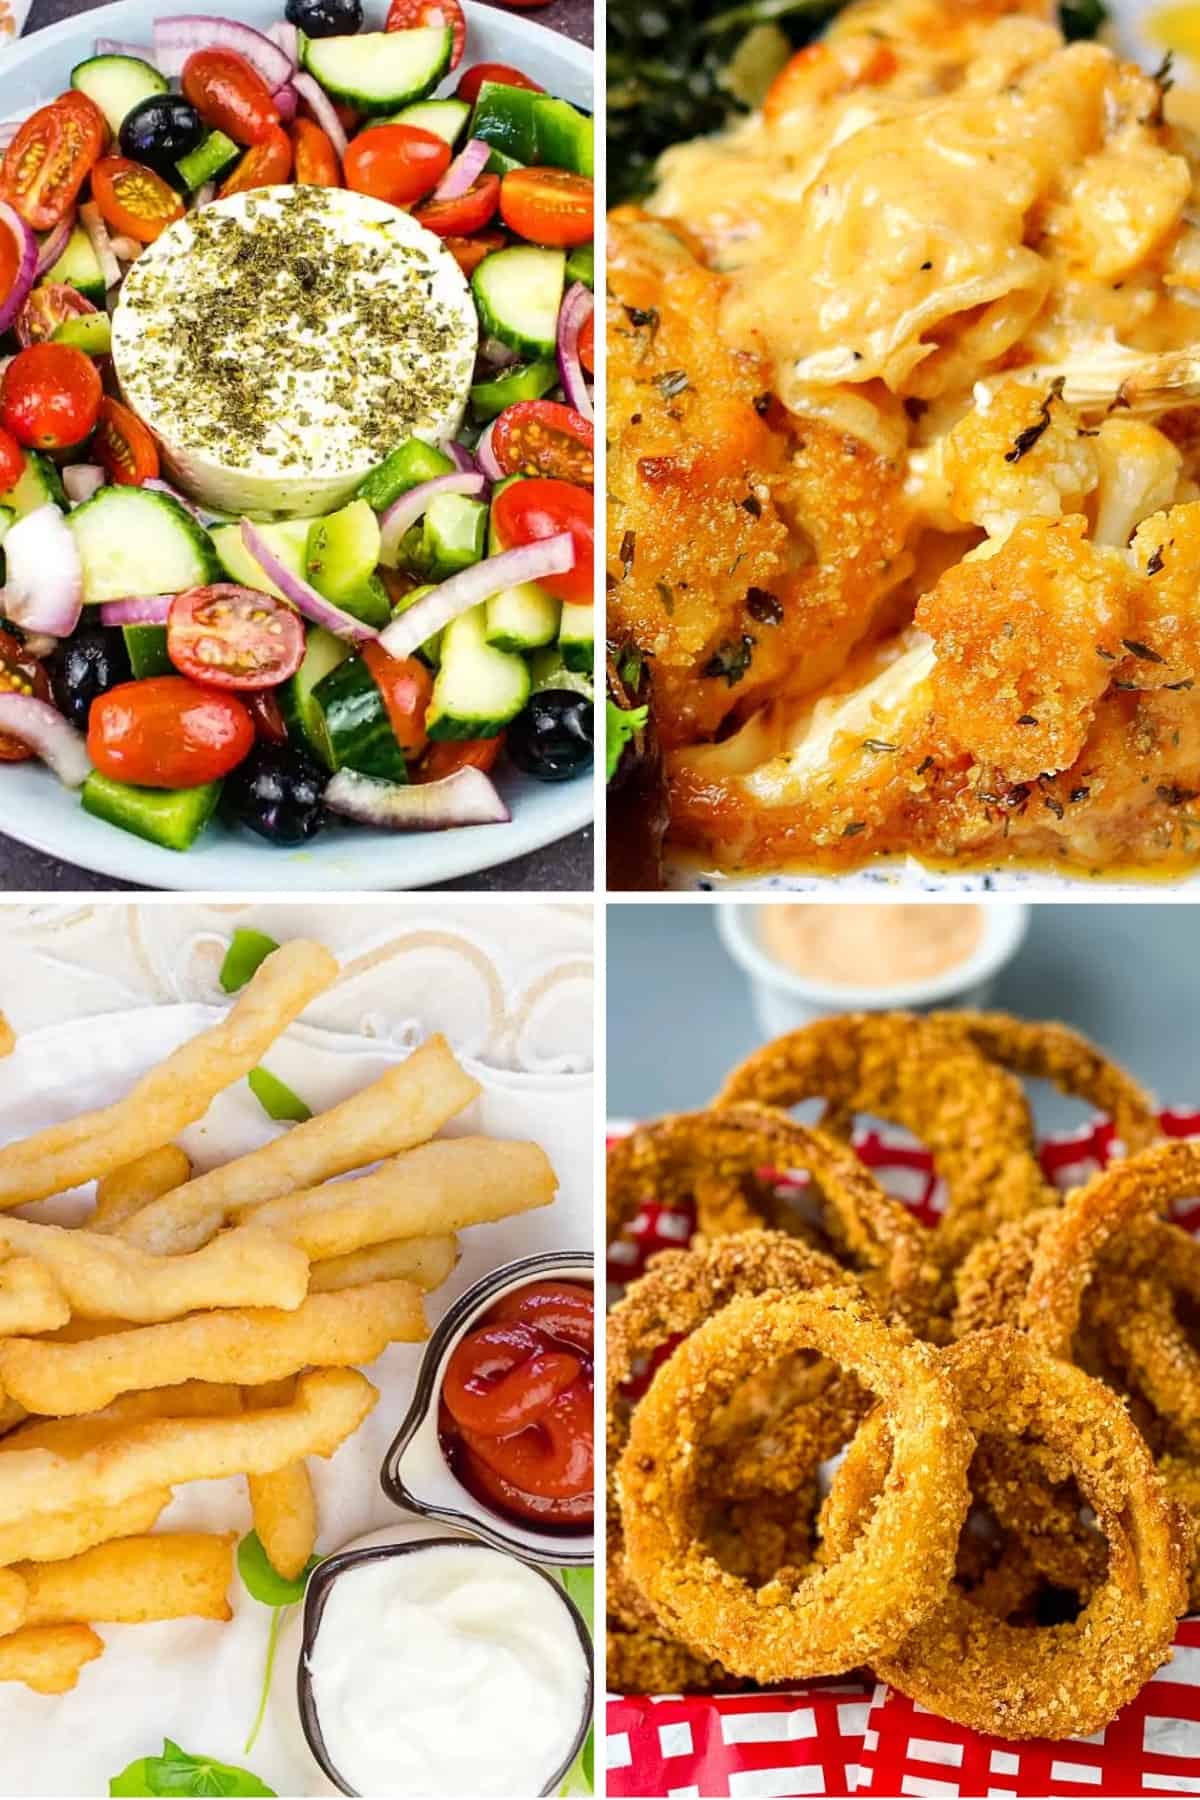 keto side dishes for burgers like Greek Salad, keto cauliflower Mac and cheese, keto fries, and keto onion rings